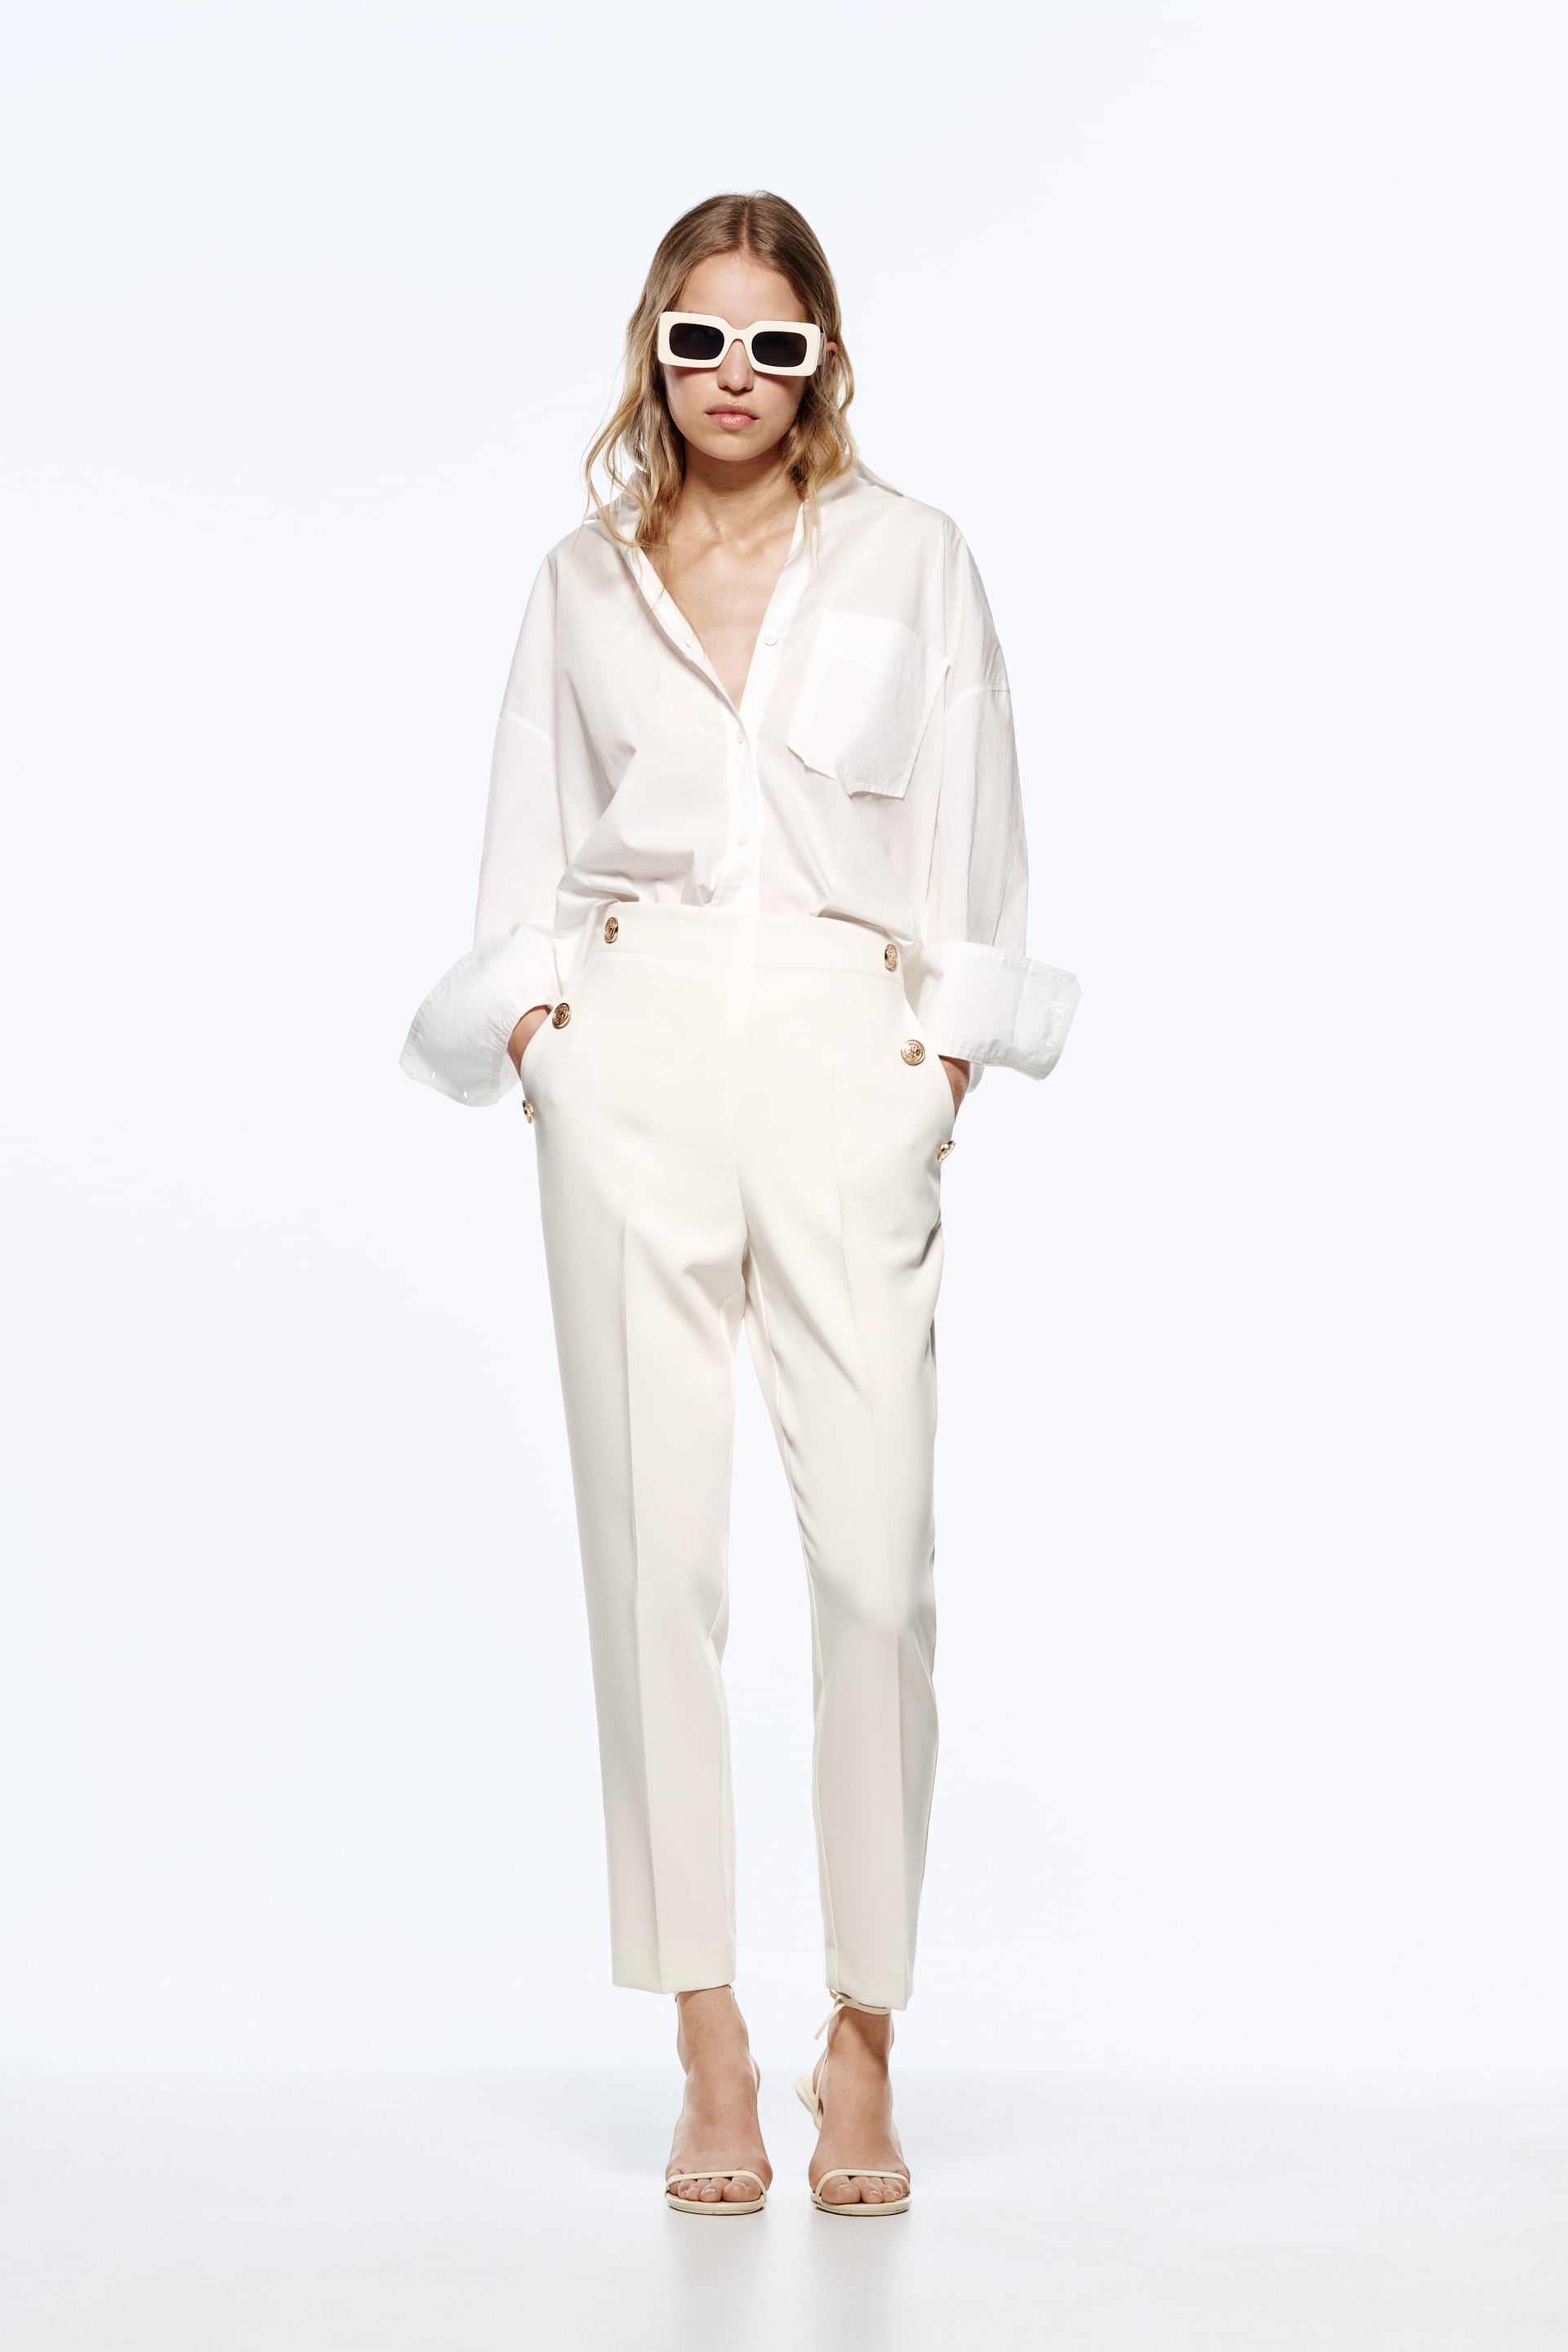 Zara waist detail pants gold button high ecru white blogger favorite